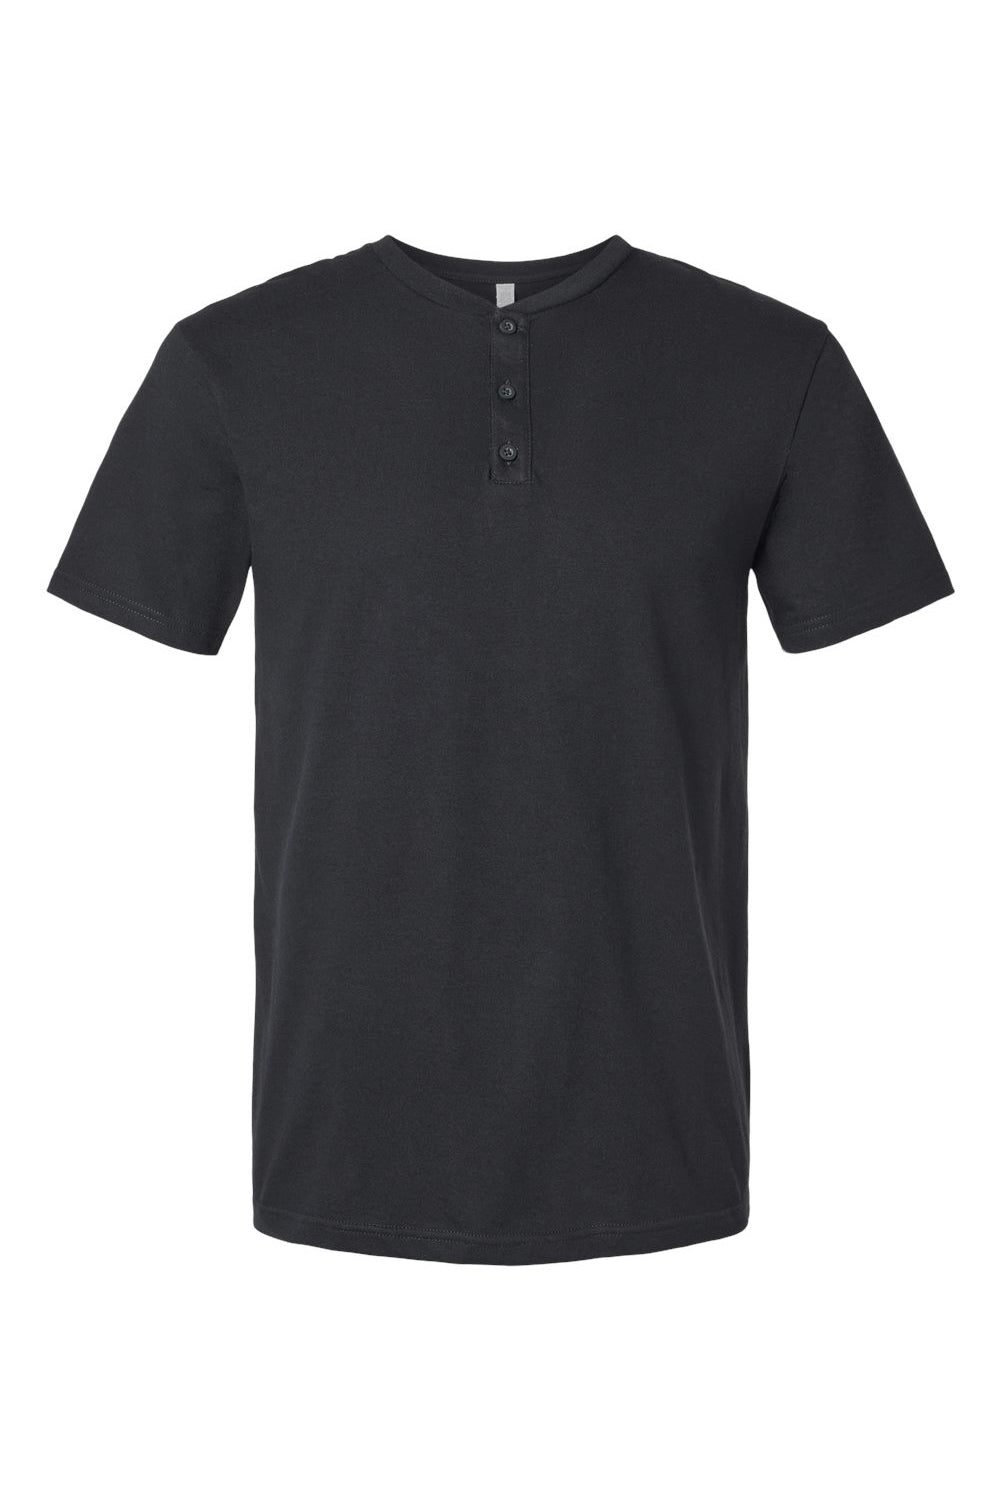 American Apparel 2004CVC Mens CVC Short Sleeve Henley T-Shirt Black Flat Front